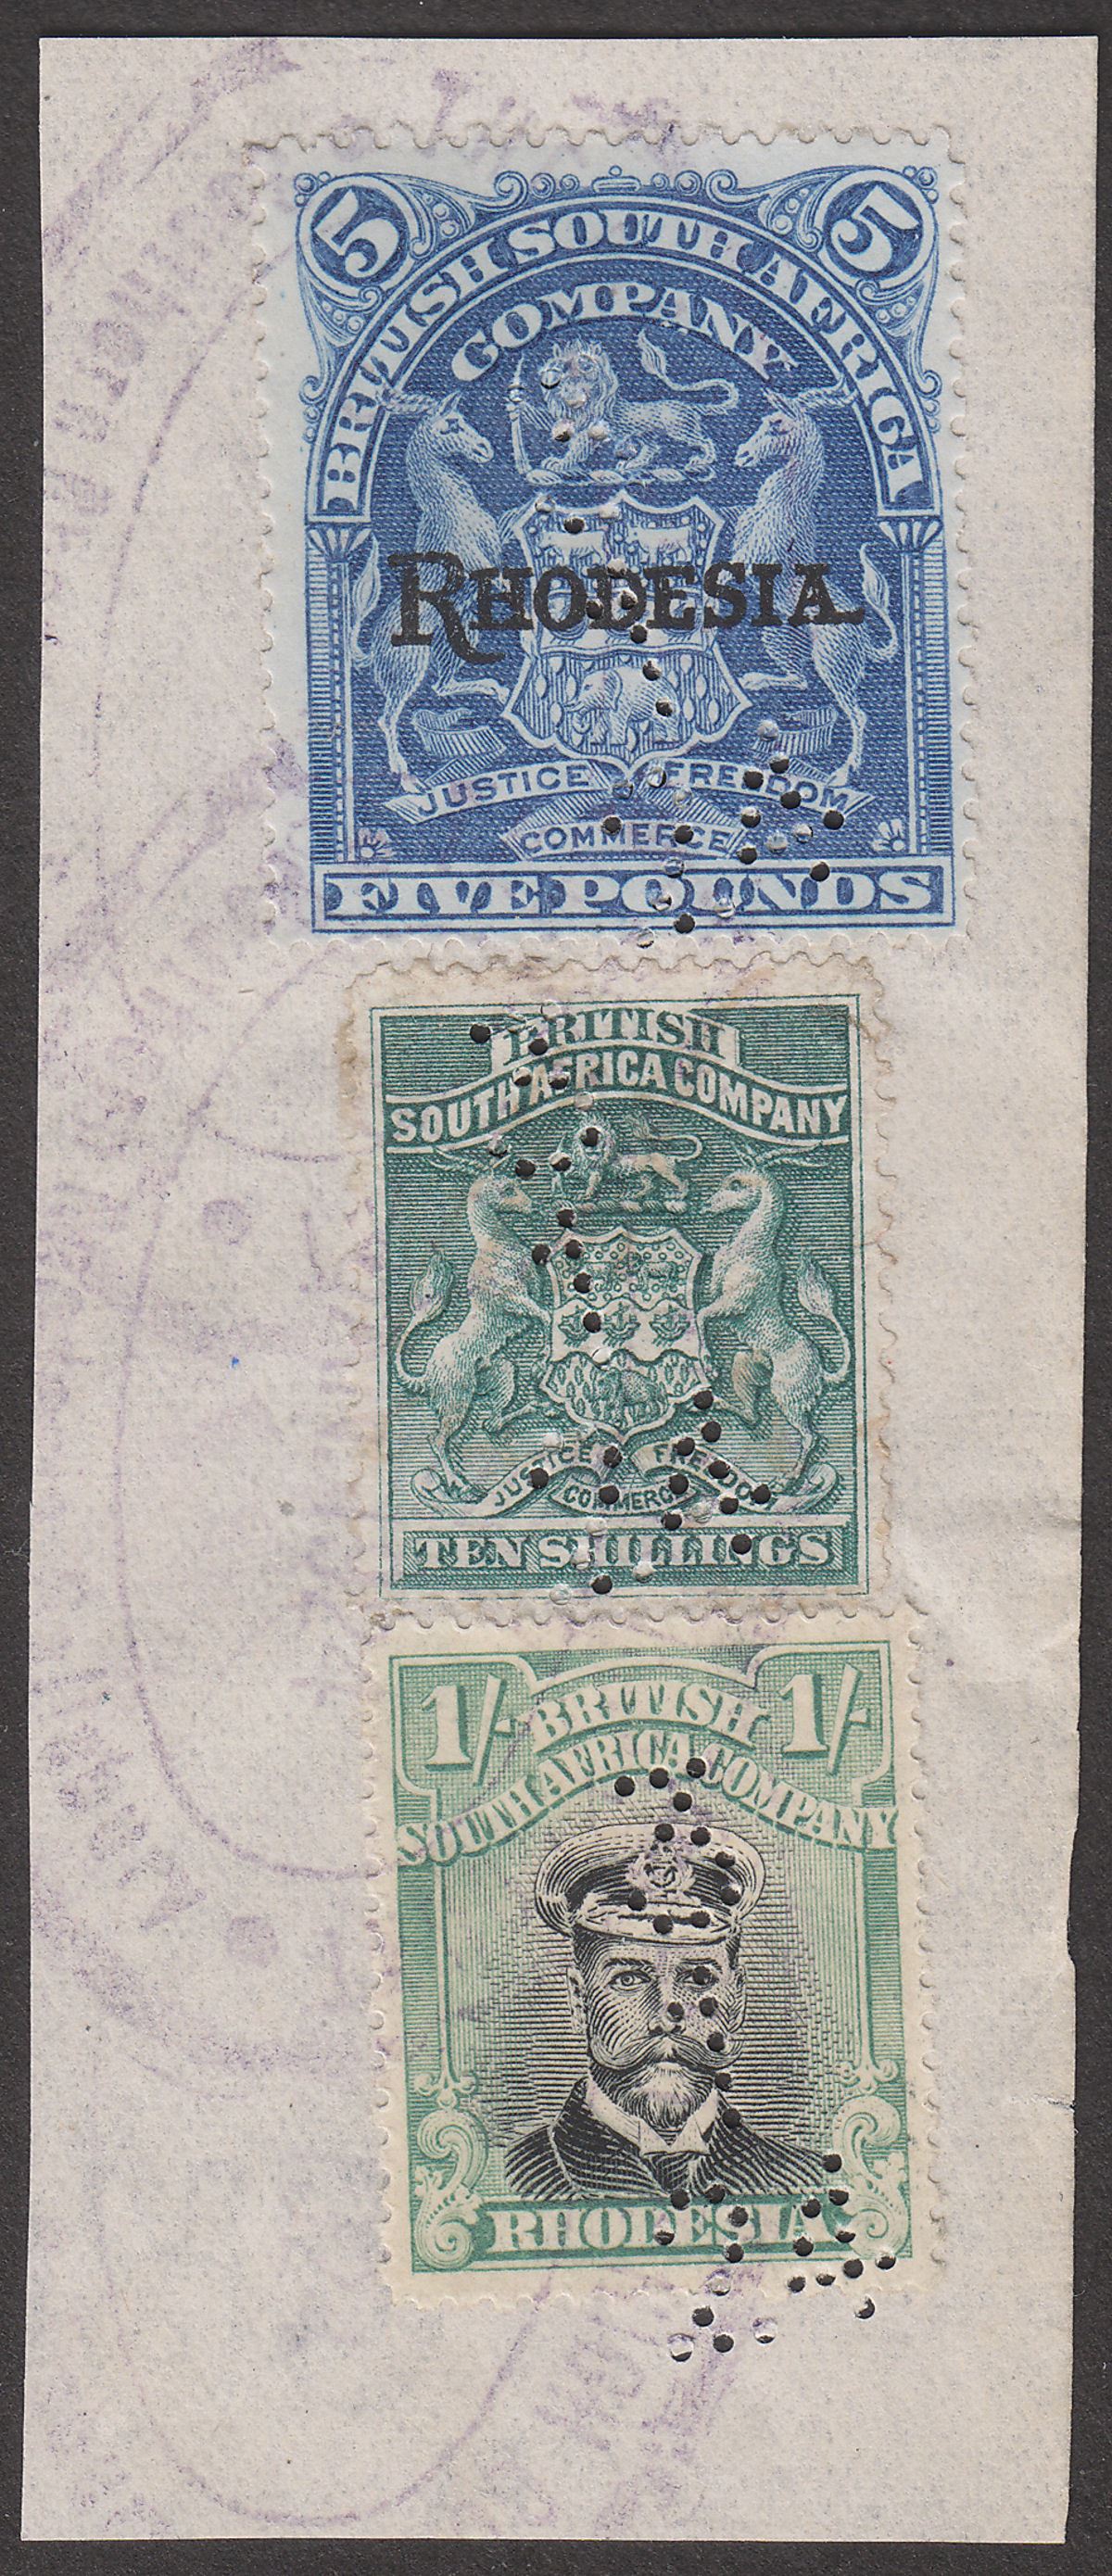 Rhodesia 1924 KGV RHODESIA Opt £5, 10sh, Admiral 1sh Fiscal Used on Piece